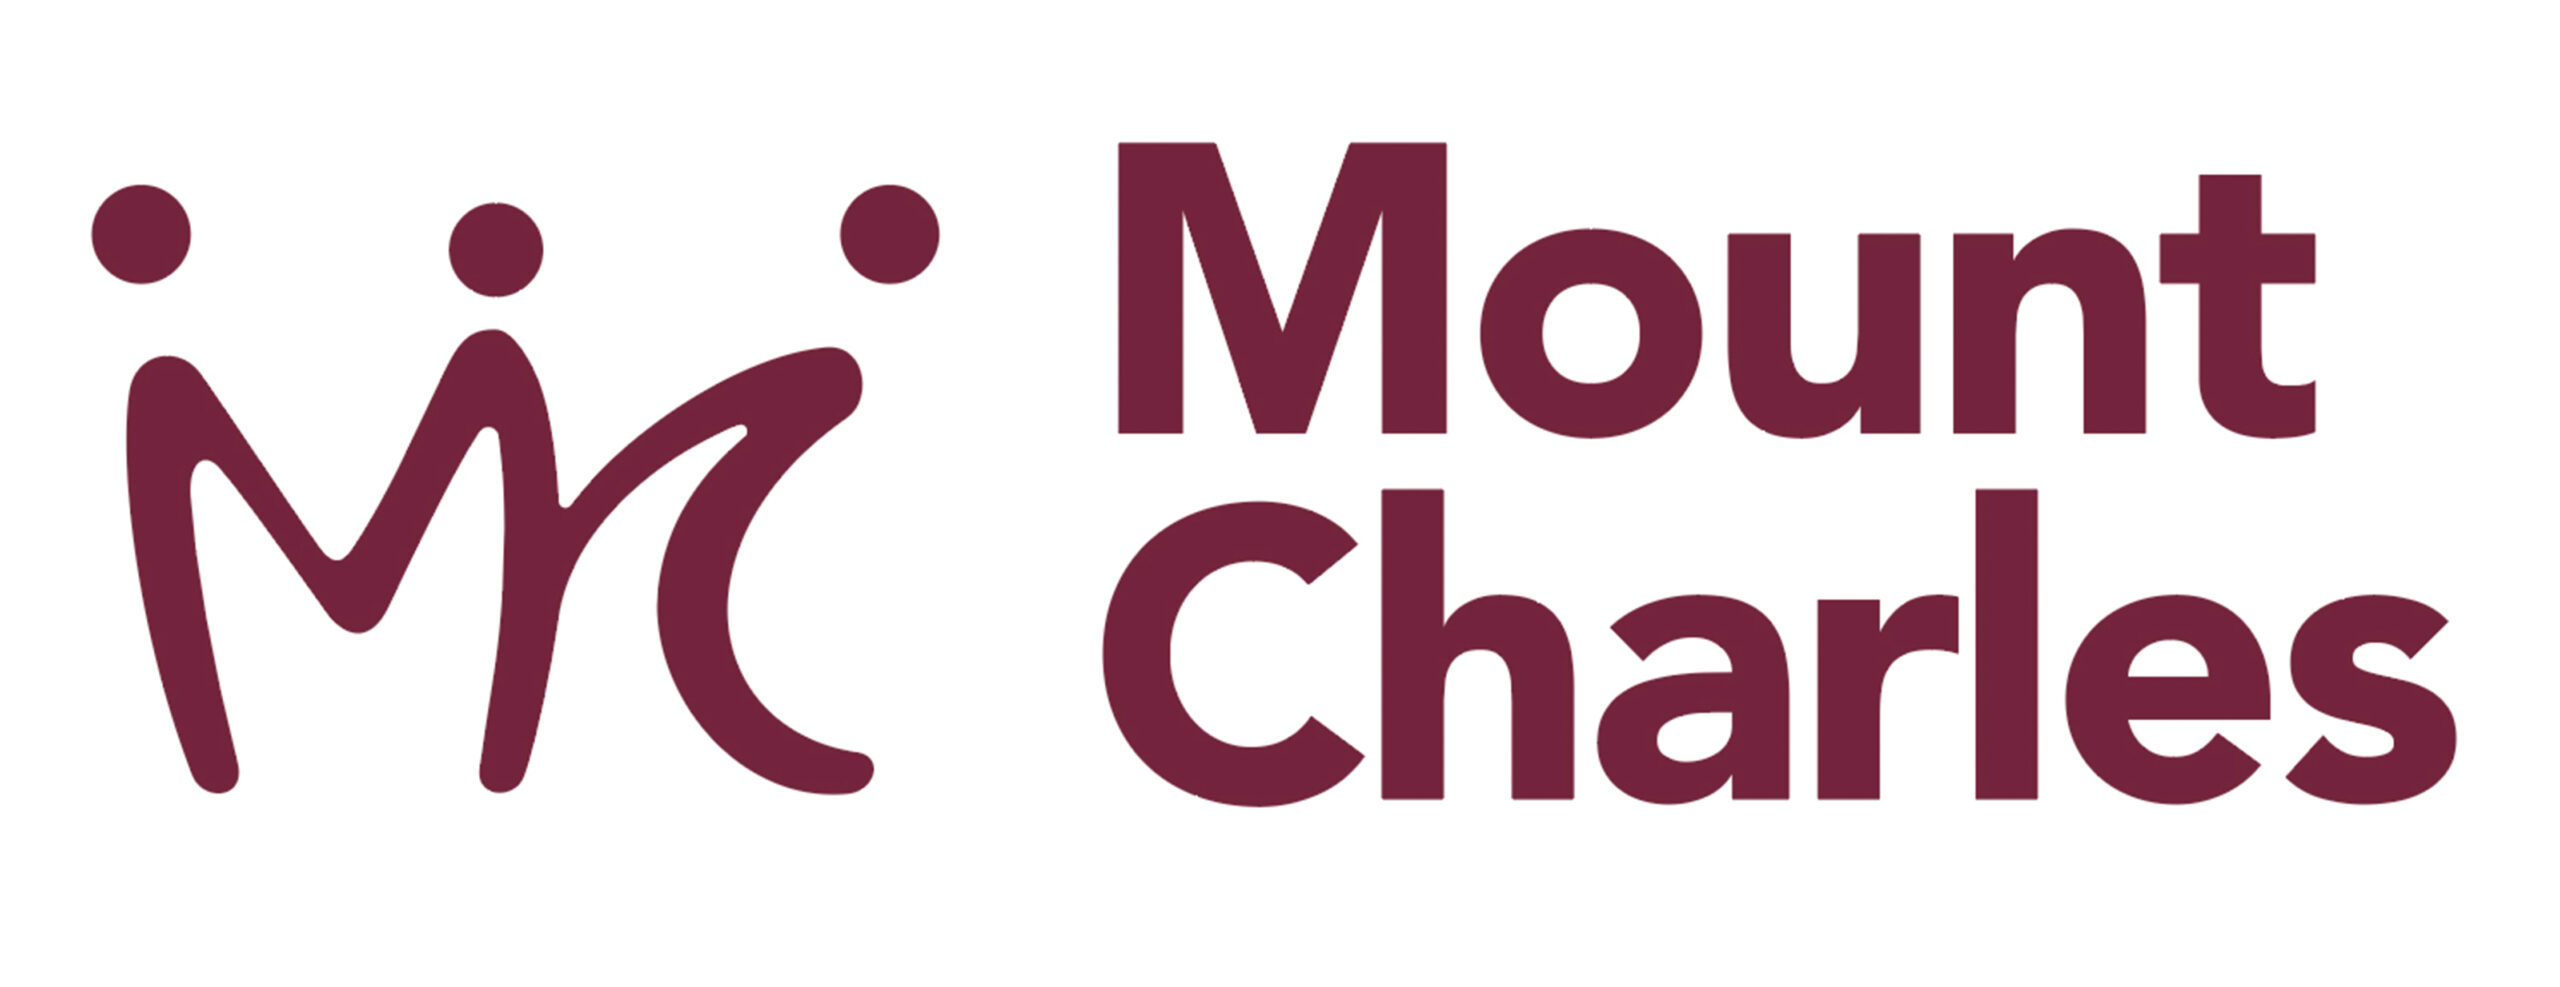 4 Mount Charles